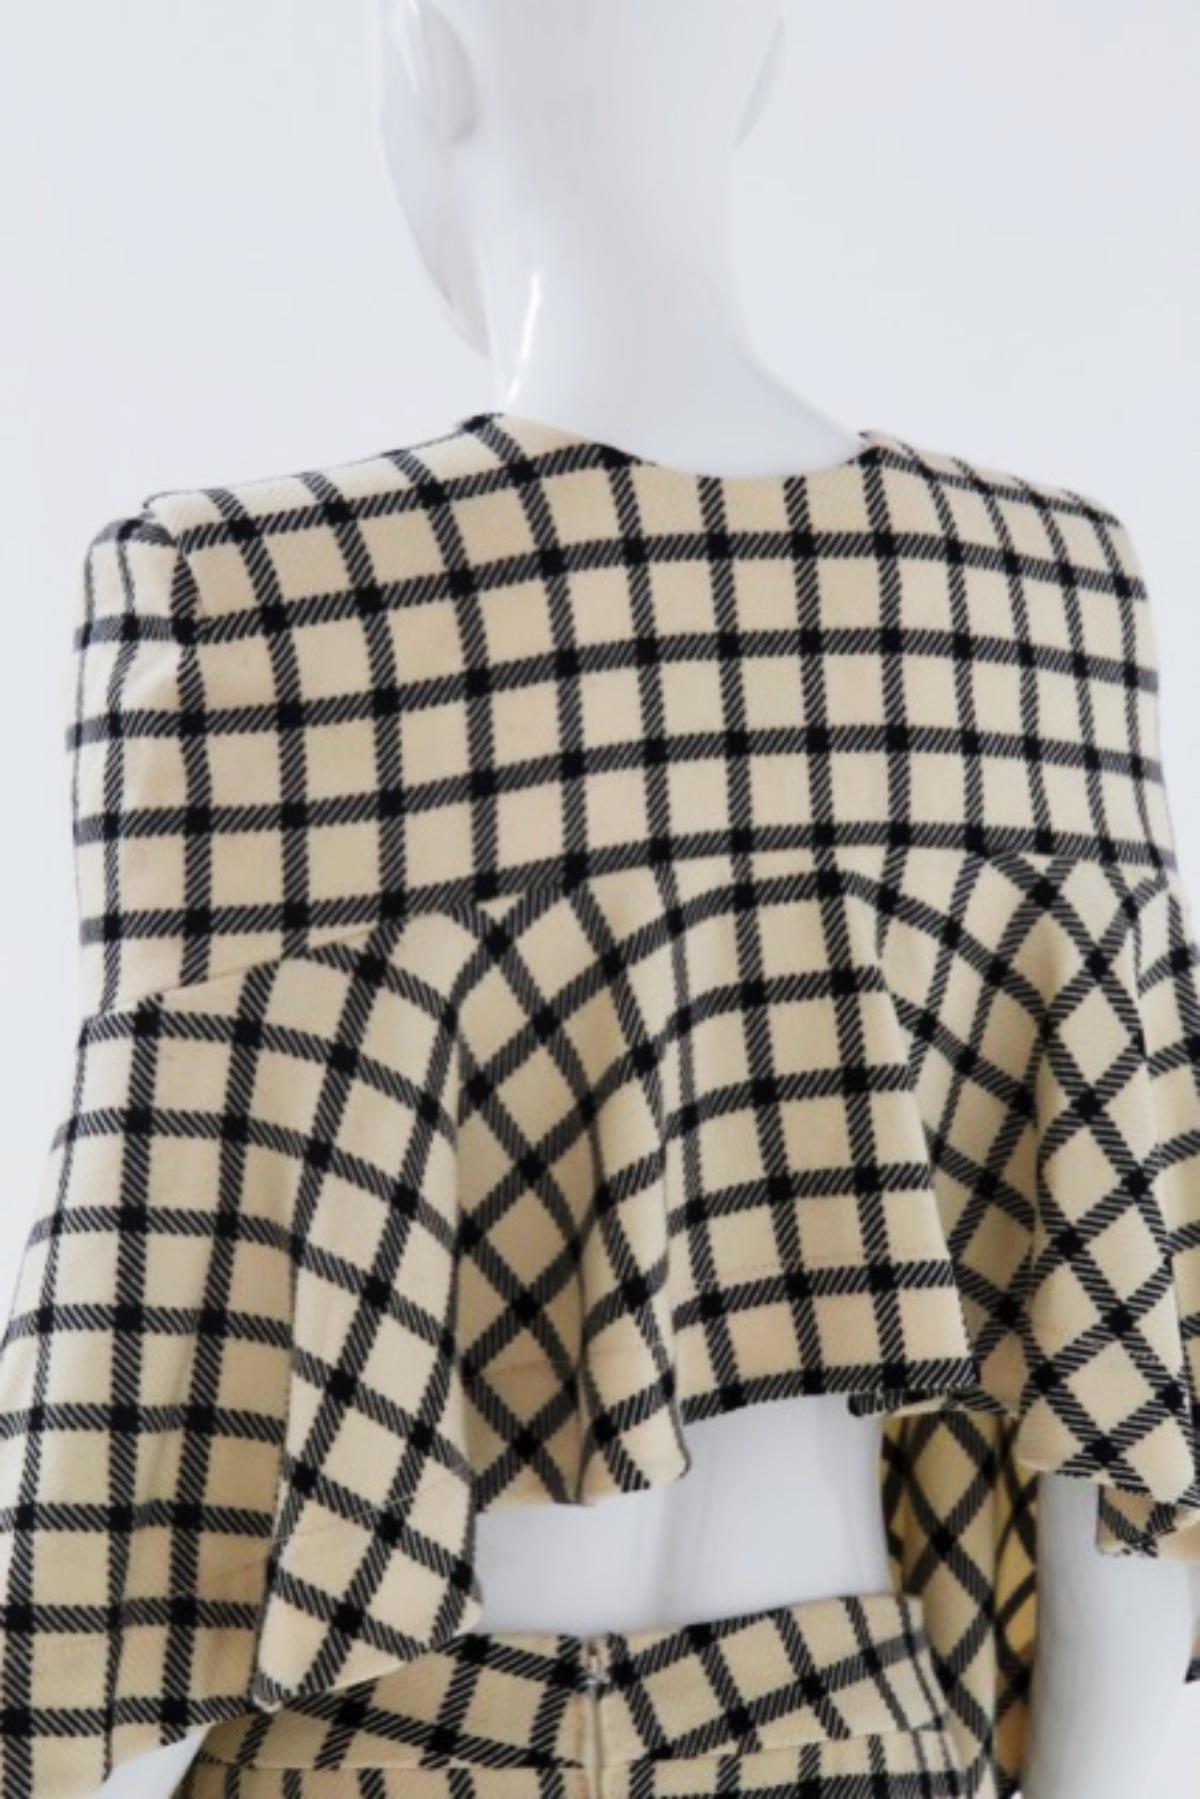 Pierre Cardin Vintage Check Wool Suit For Sale 6